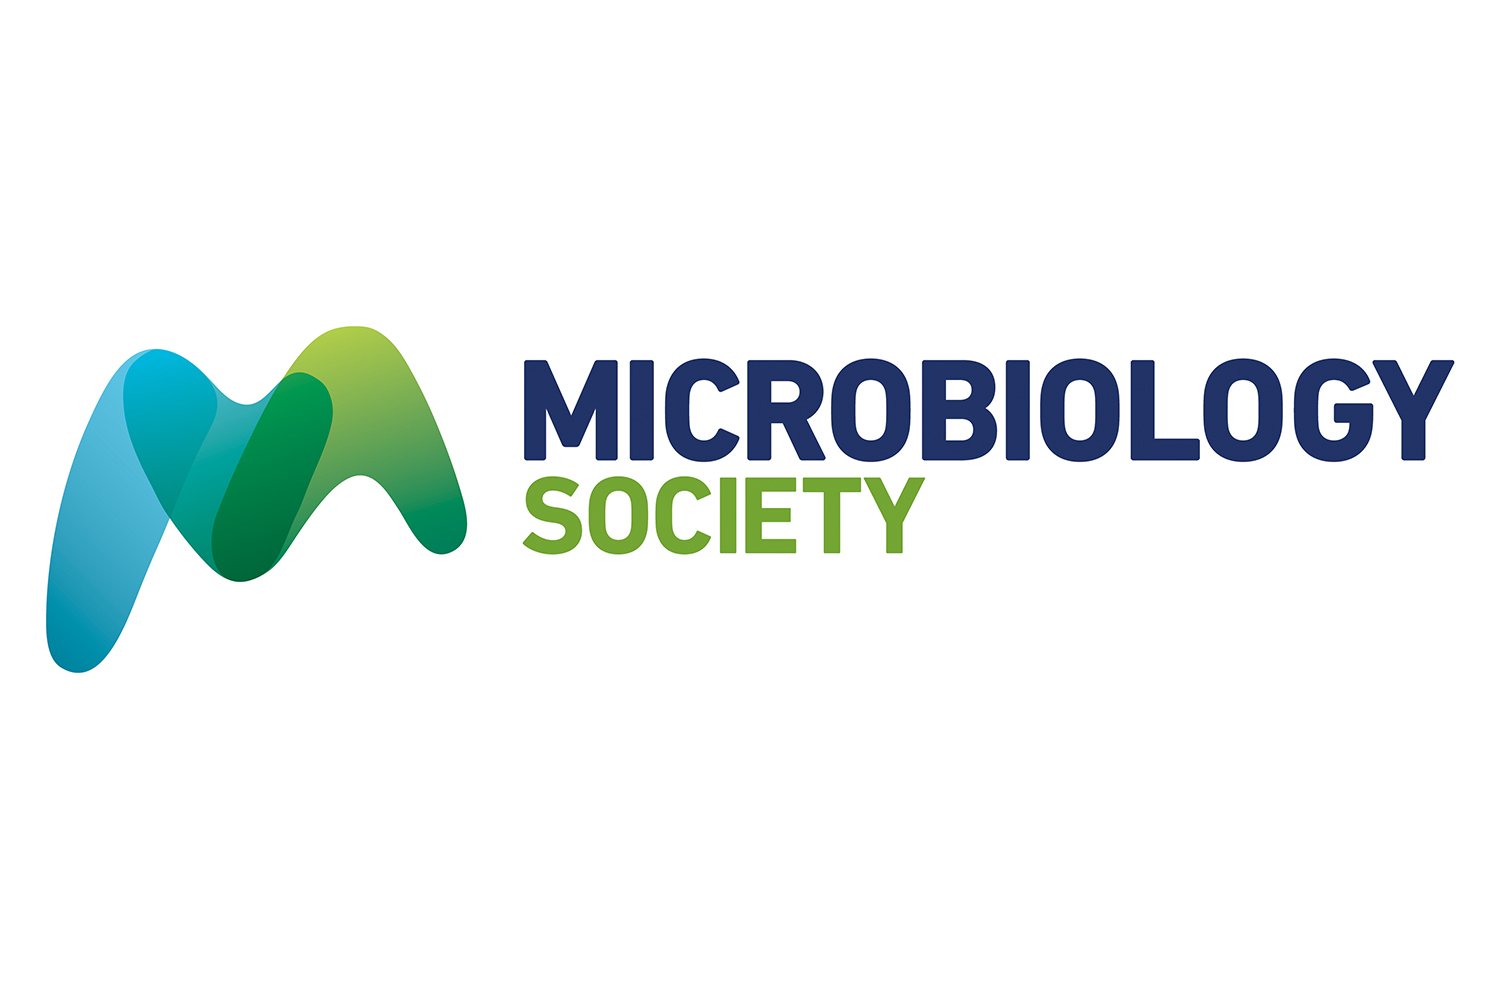 Dr Miguel Toribio-Mateas Microbiology SocietyMember copy.jpg (Copy) (Copy) (Copy) (Copy)